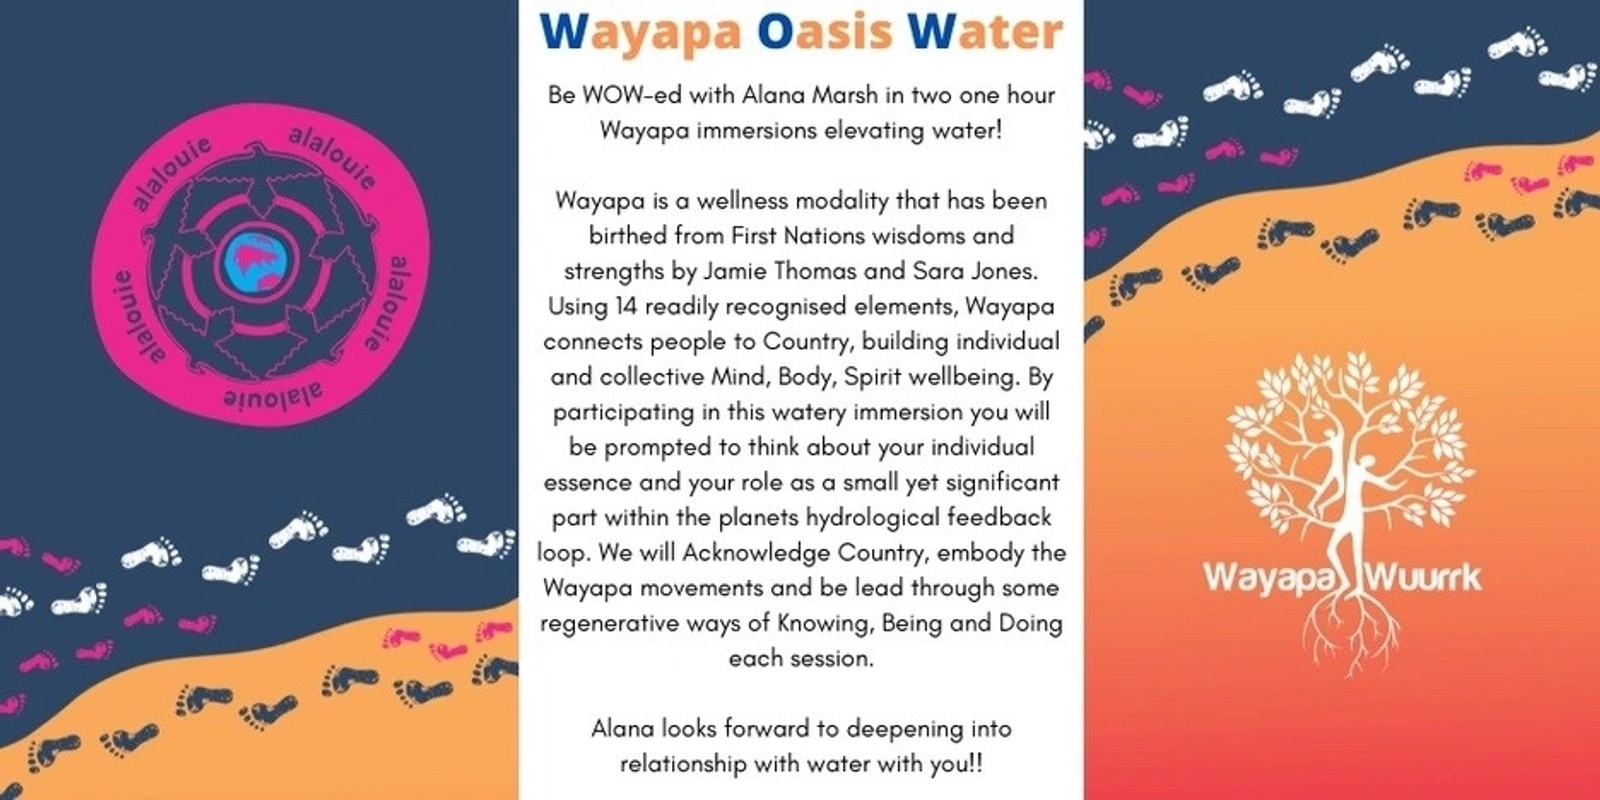 Wayapa, Oasis, Water (WOW)